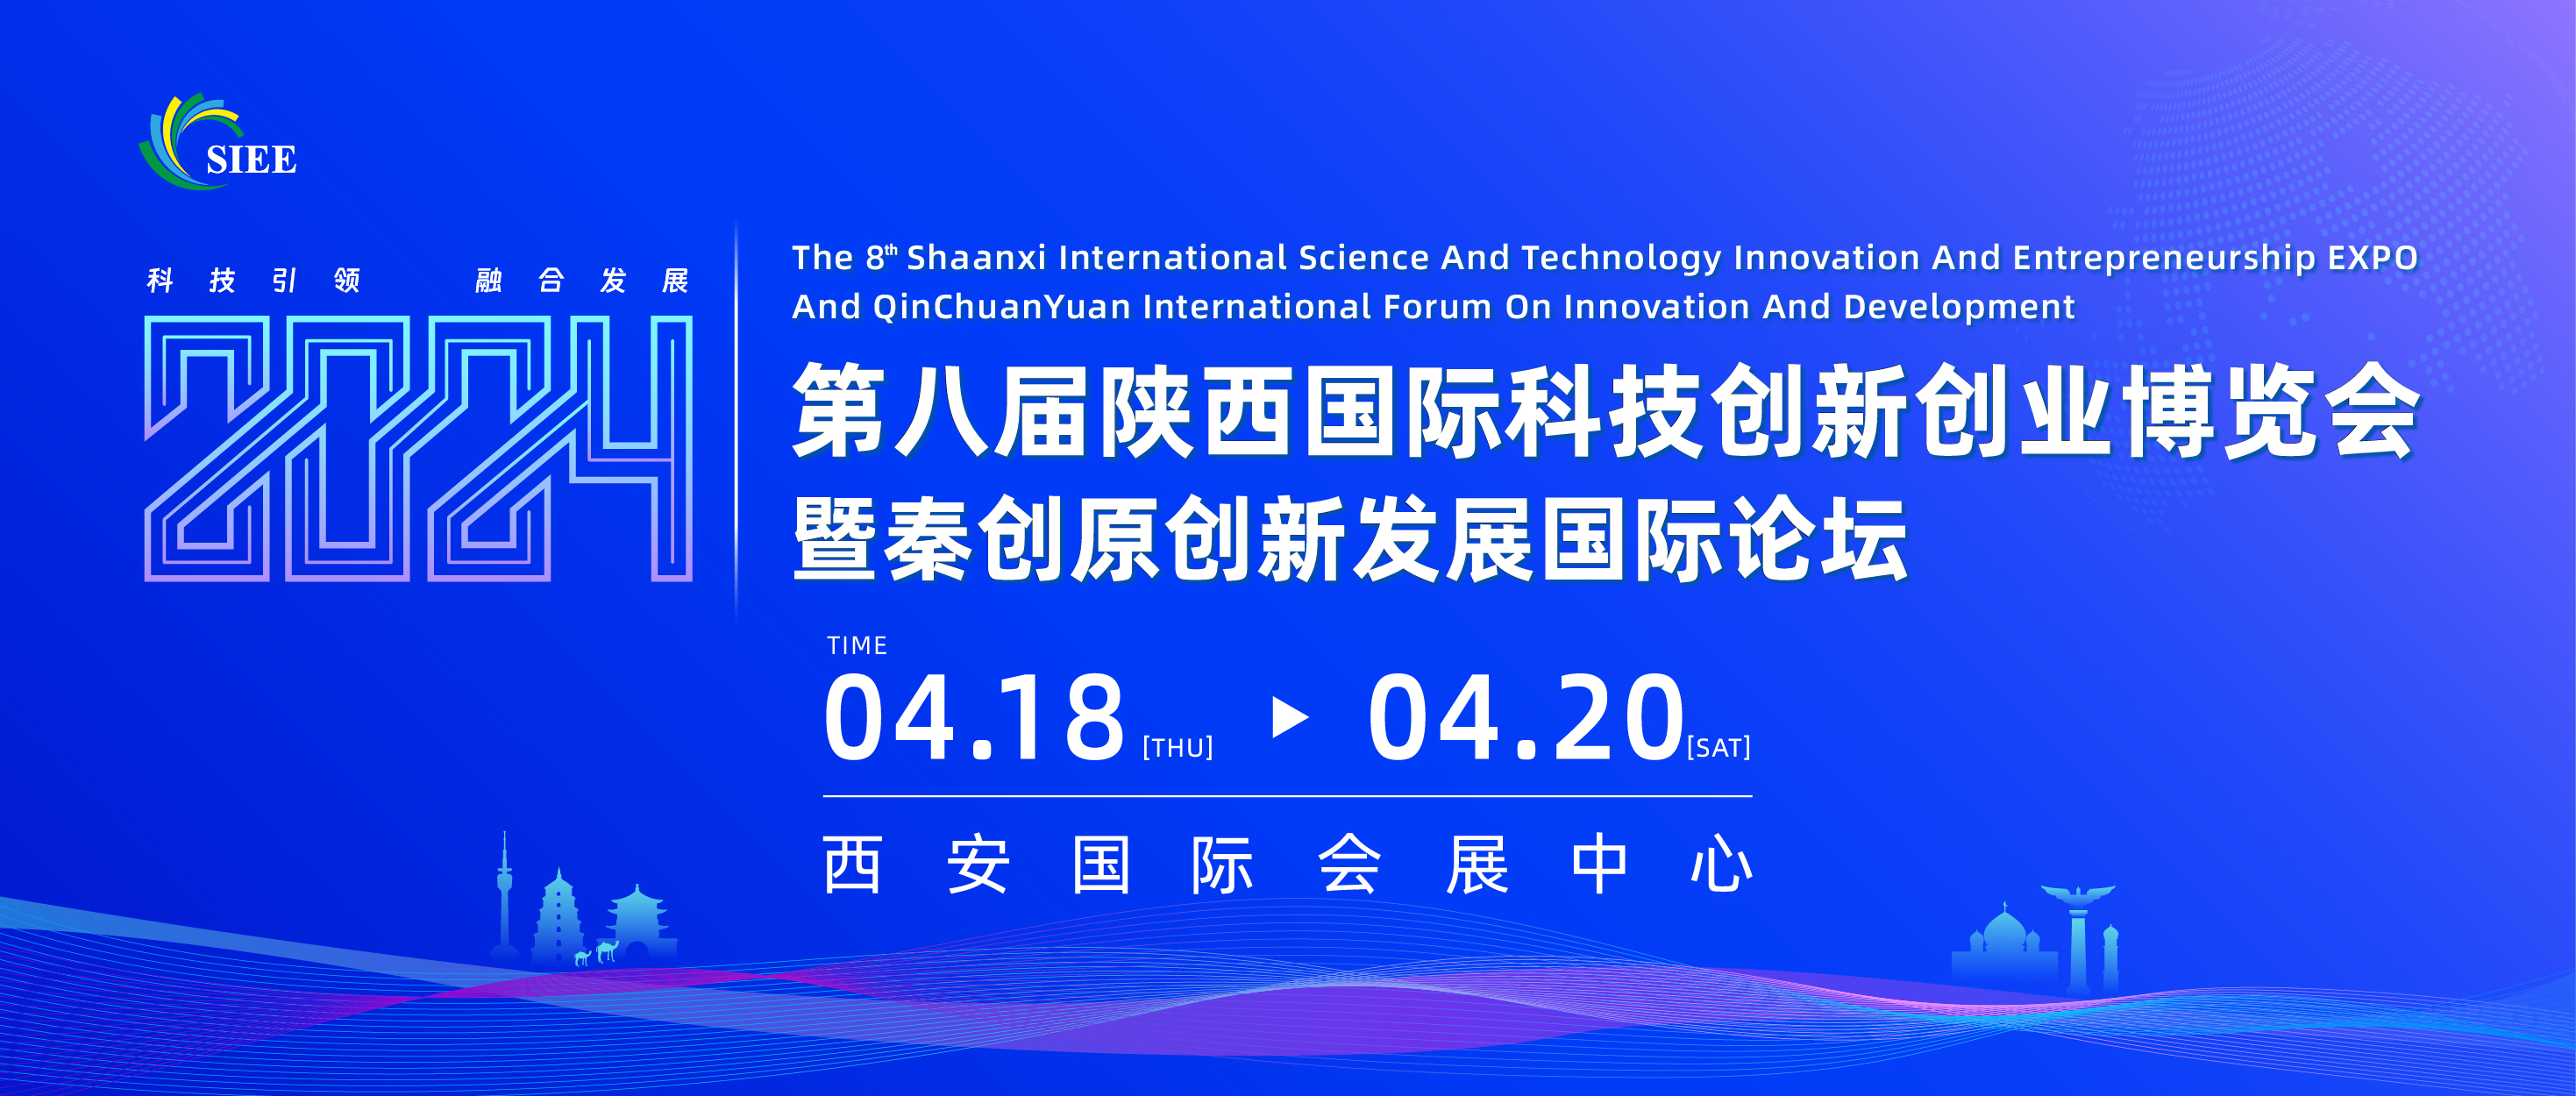 dafacasino网页版抢先看|第八届陕西国际科技创新创业博览会暨秦创原创新发展国际论坛将于4月18日在西安开幕